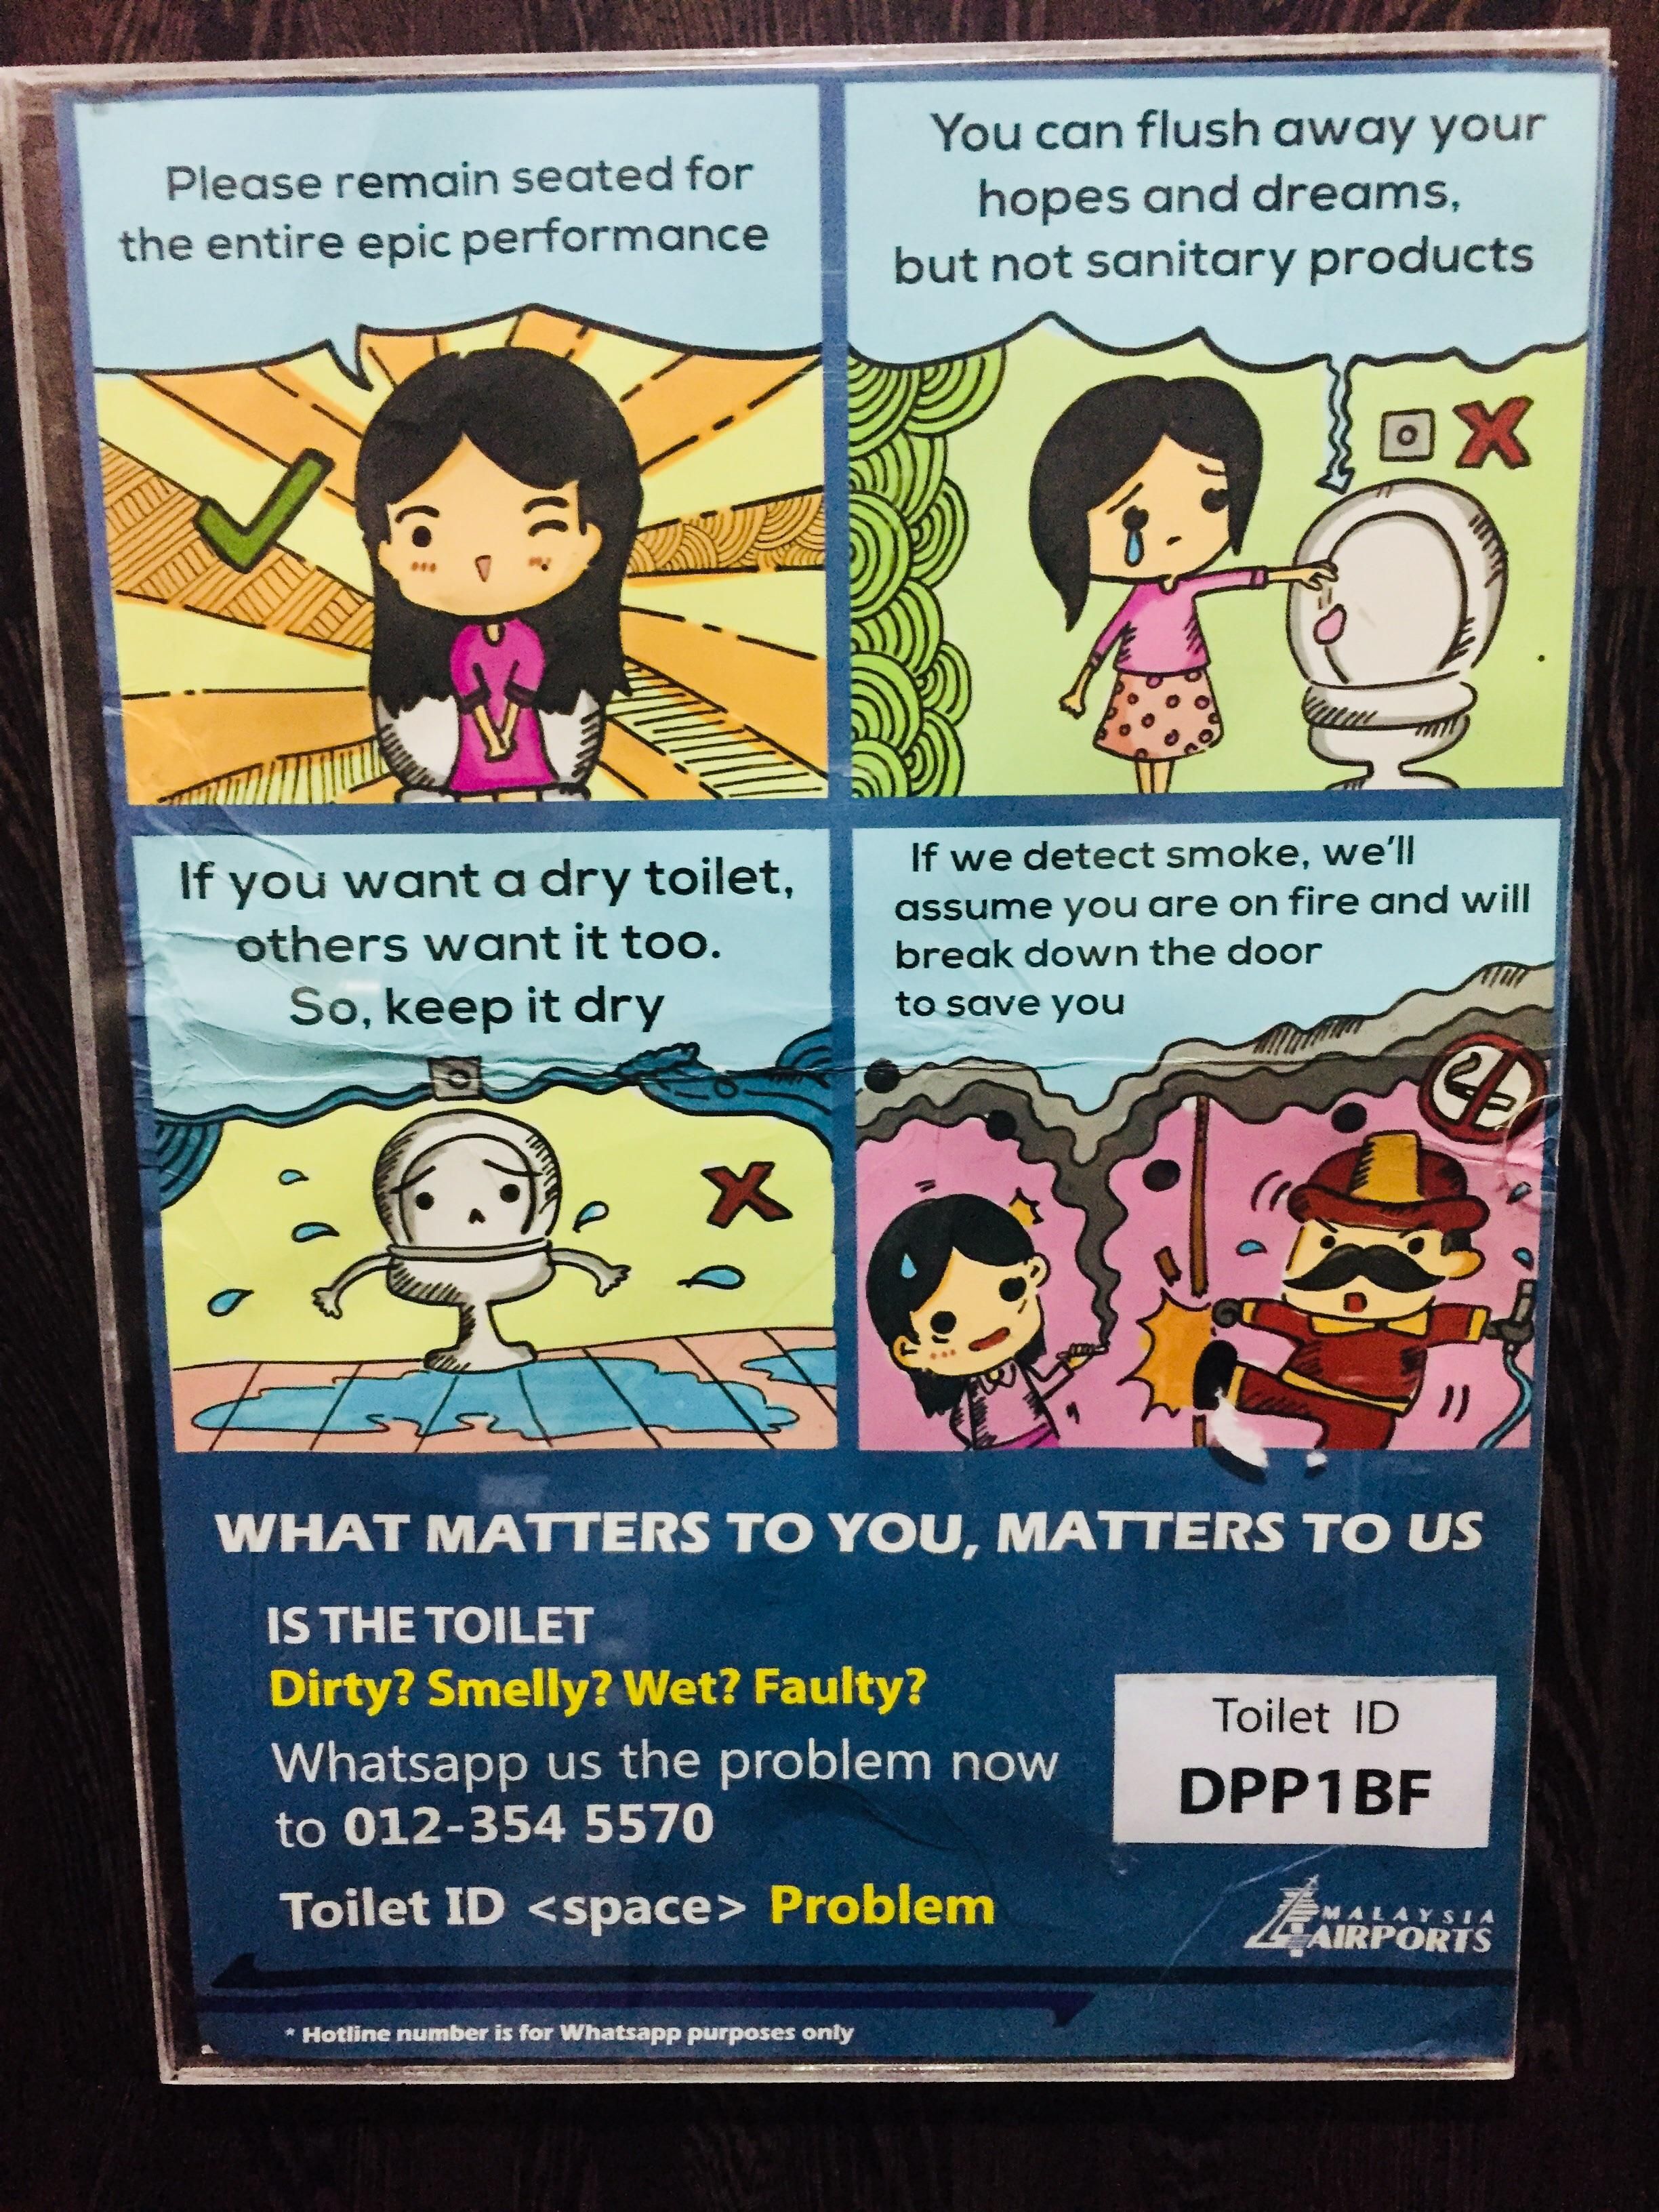 Malaysia airport bathroom rules